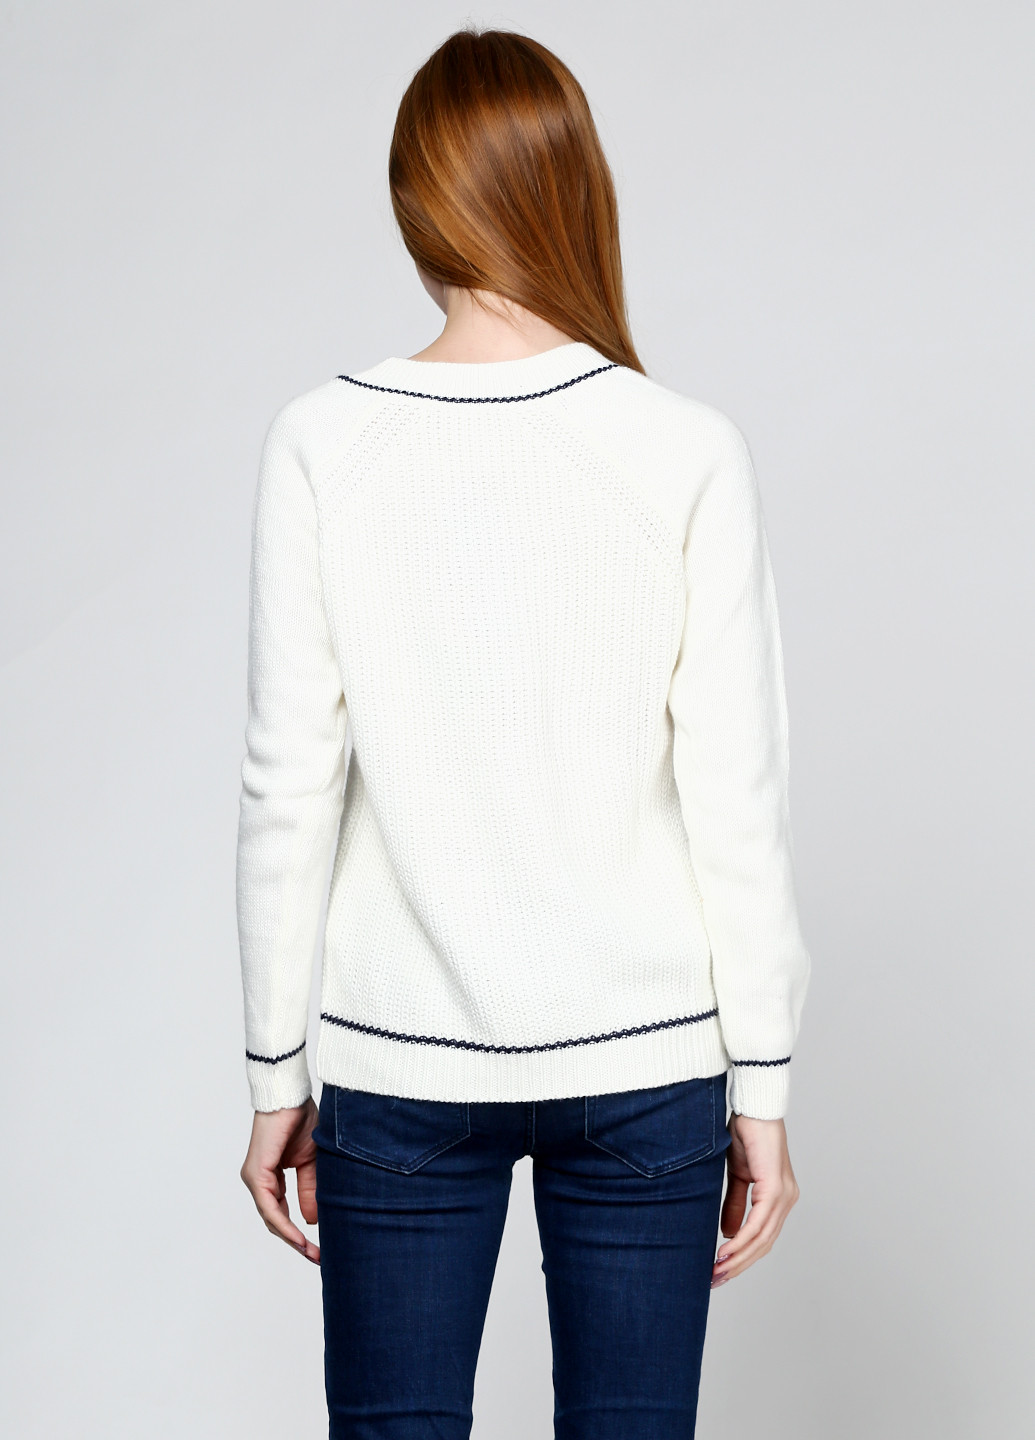 Белый демисезонный пуловер пуловер Vivacita